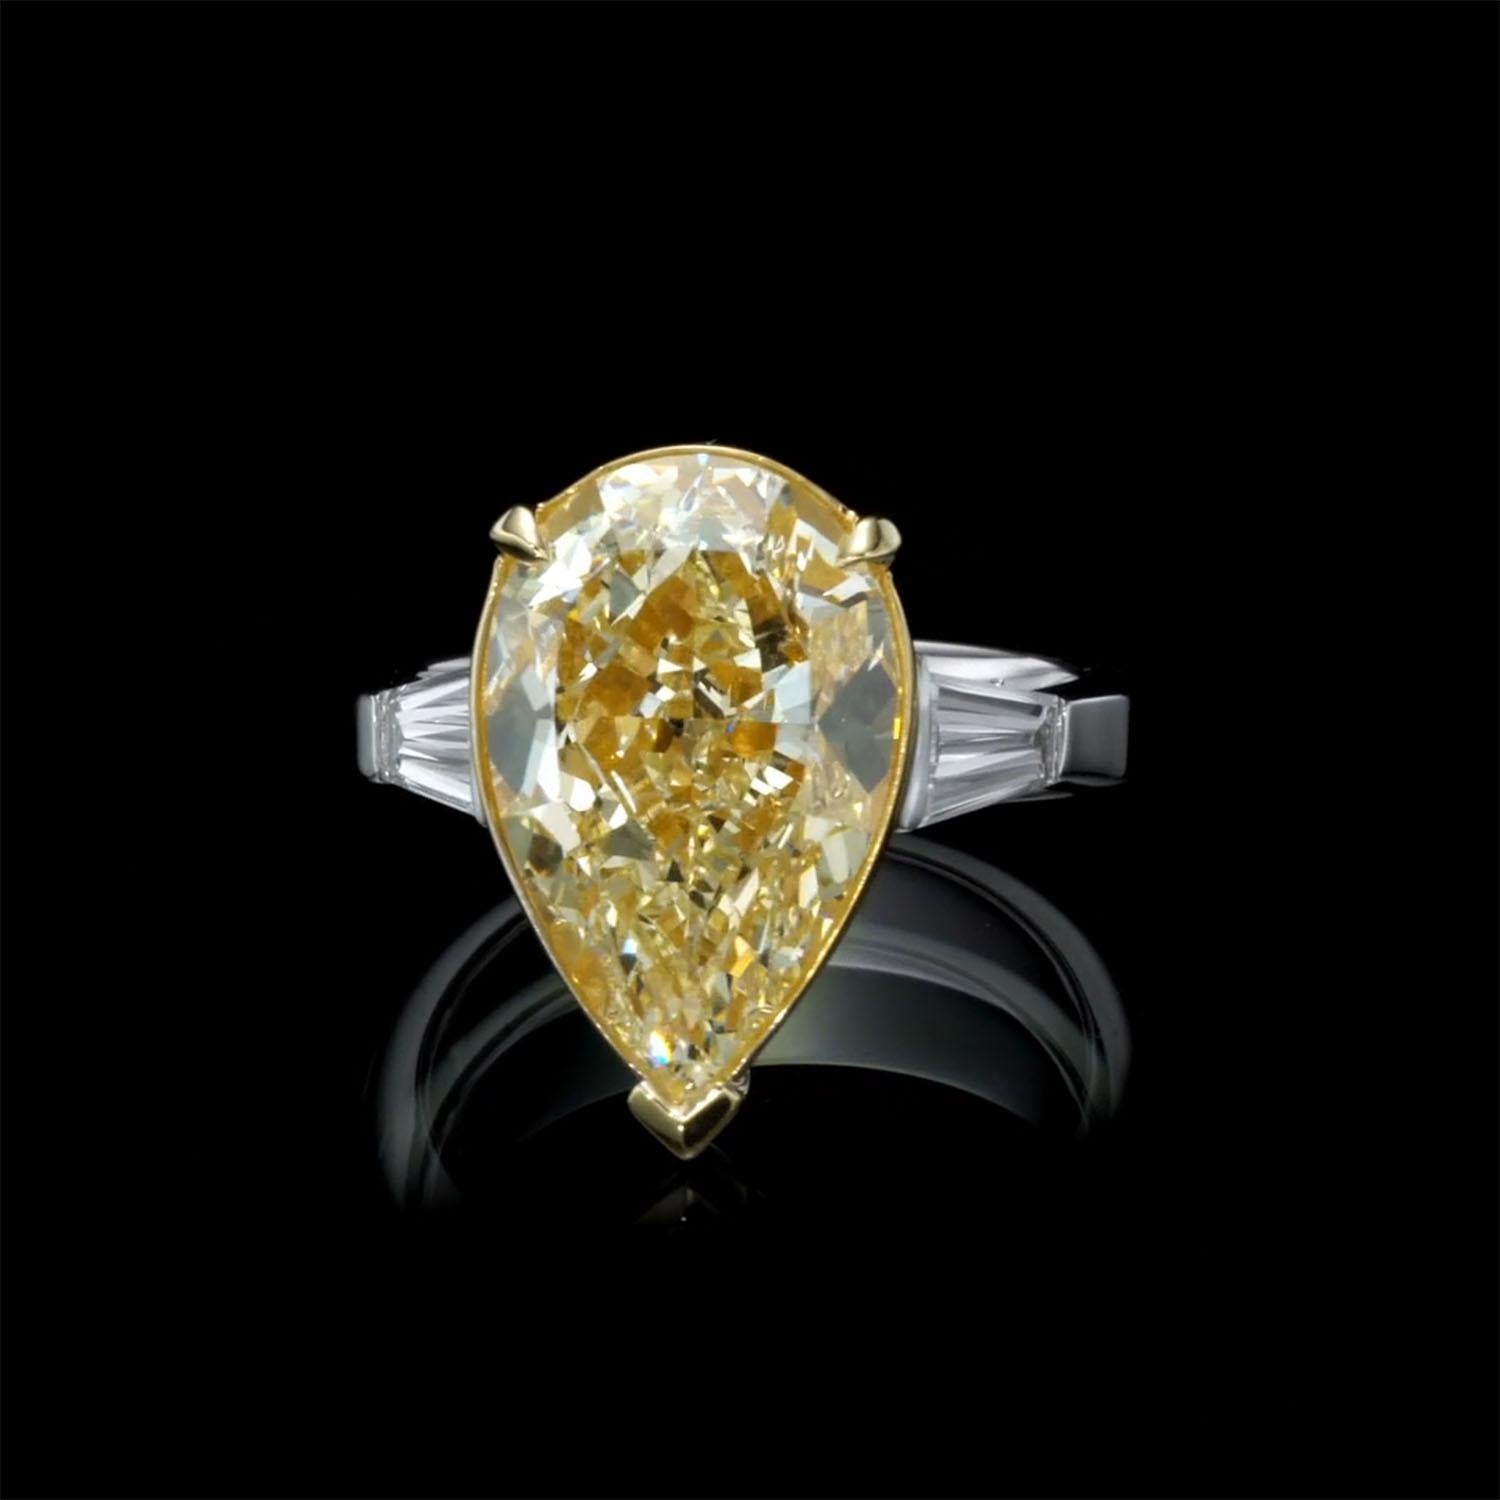 Women's 9.14 Carat Natural Yellow Diamond Ring GIA, Large Yellow Diamond Ring for Women For Sale